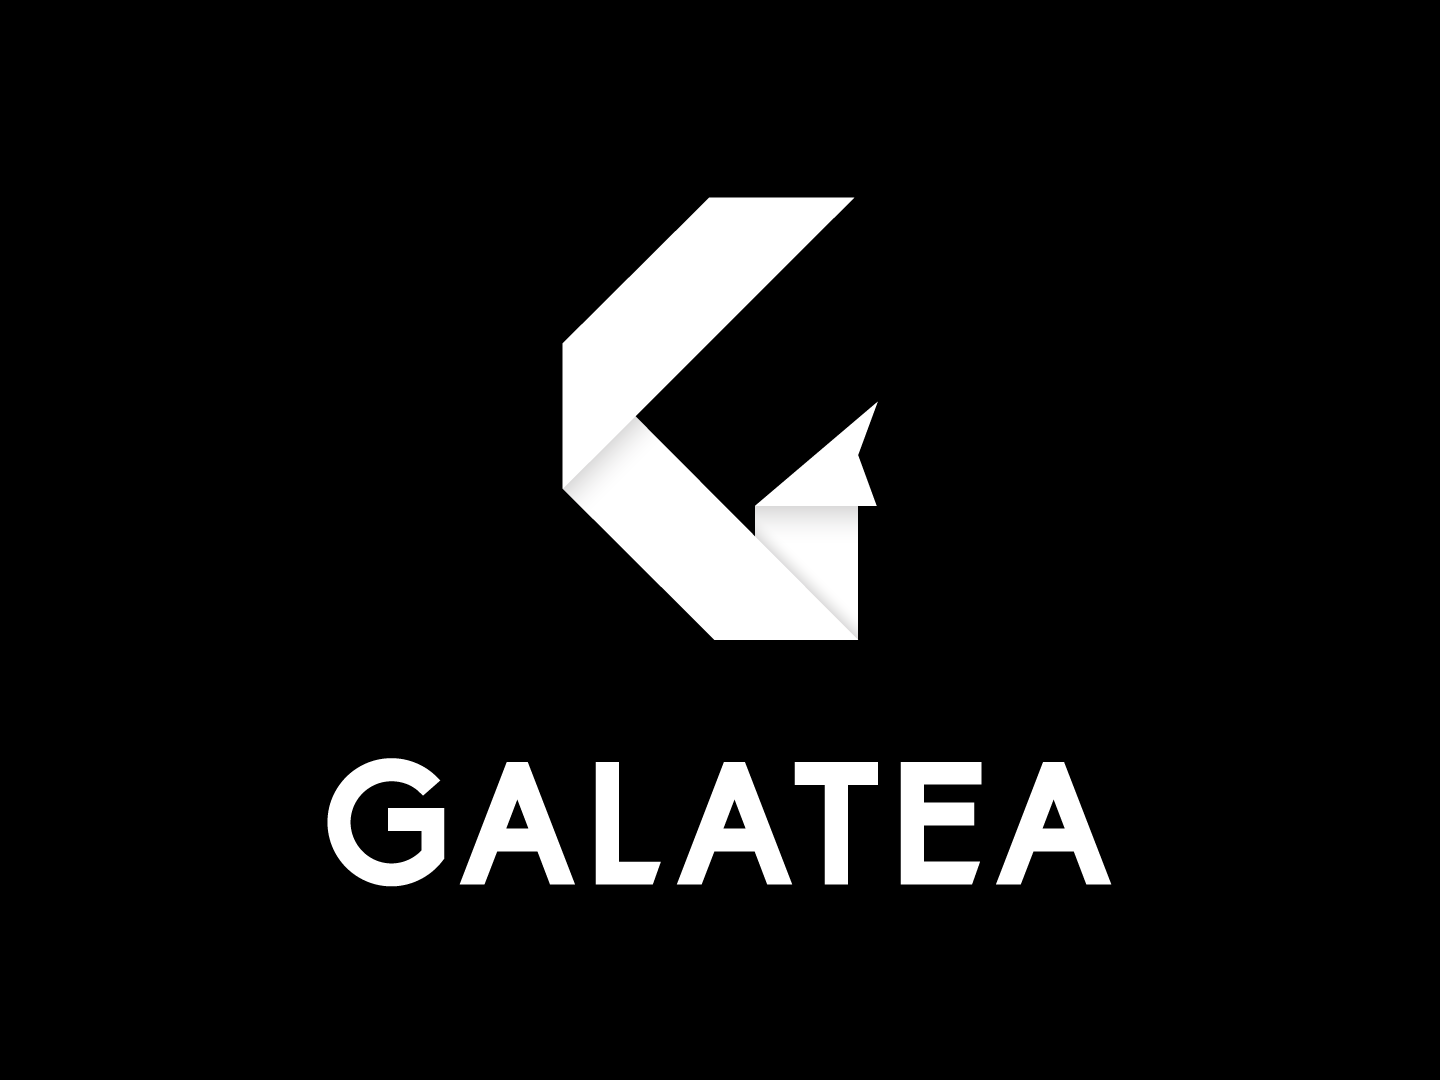 Galatea logo white onblack